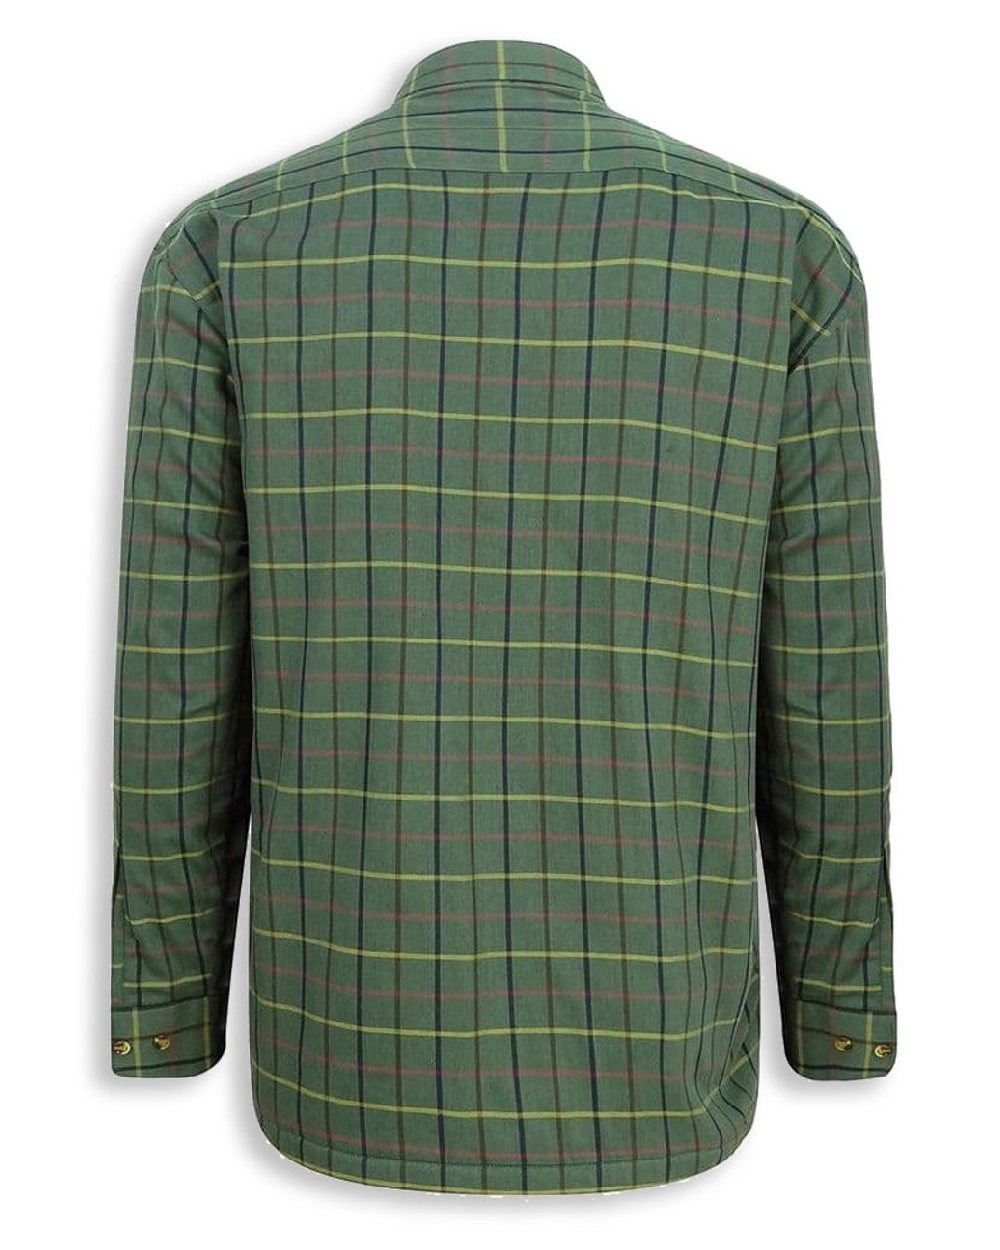 Hoggs of Fife Micro Fleece Lined Shirt in Beech 